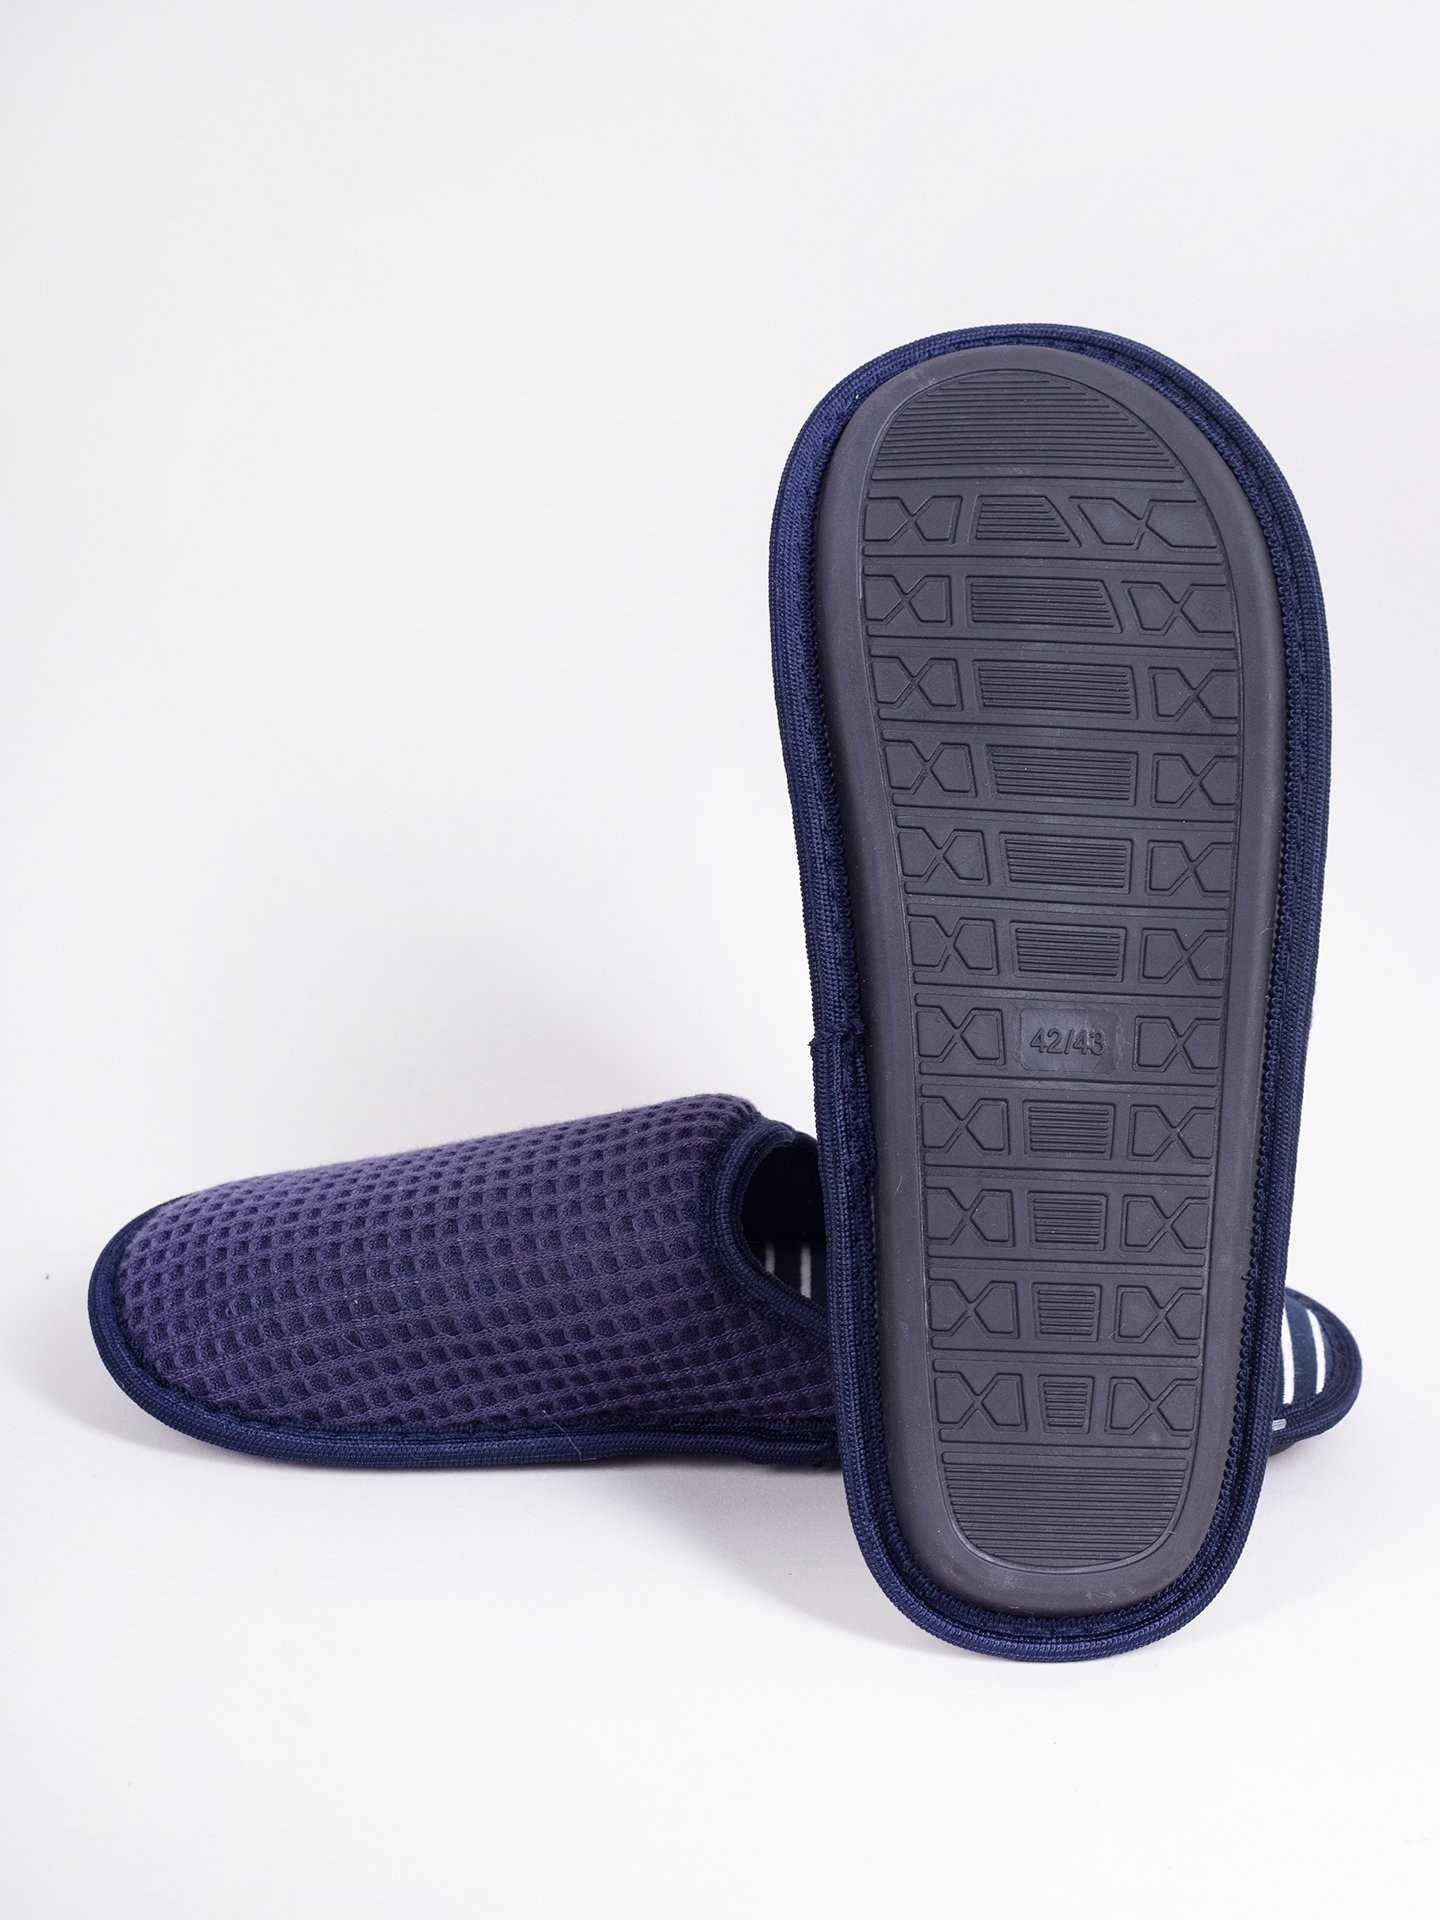 Men's Slippers model 17957924 Navy Blue 4243 - Yoclub